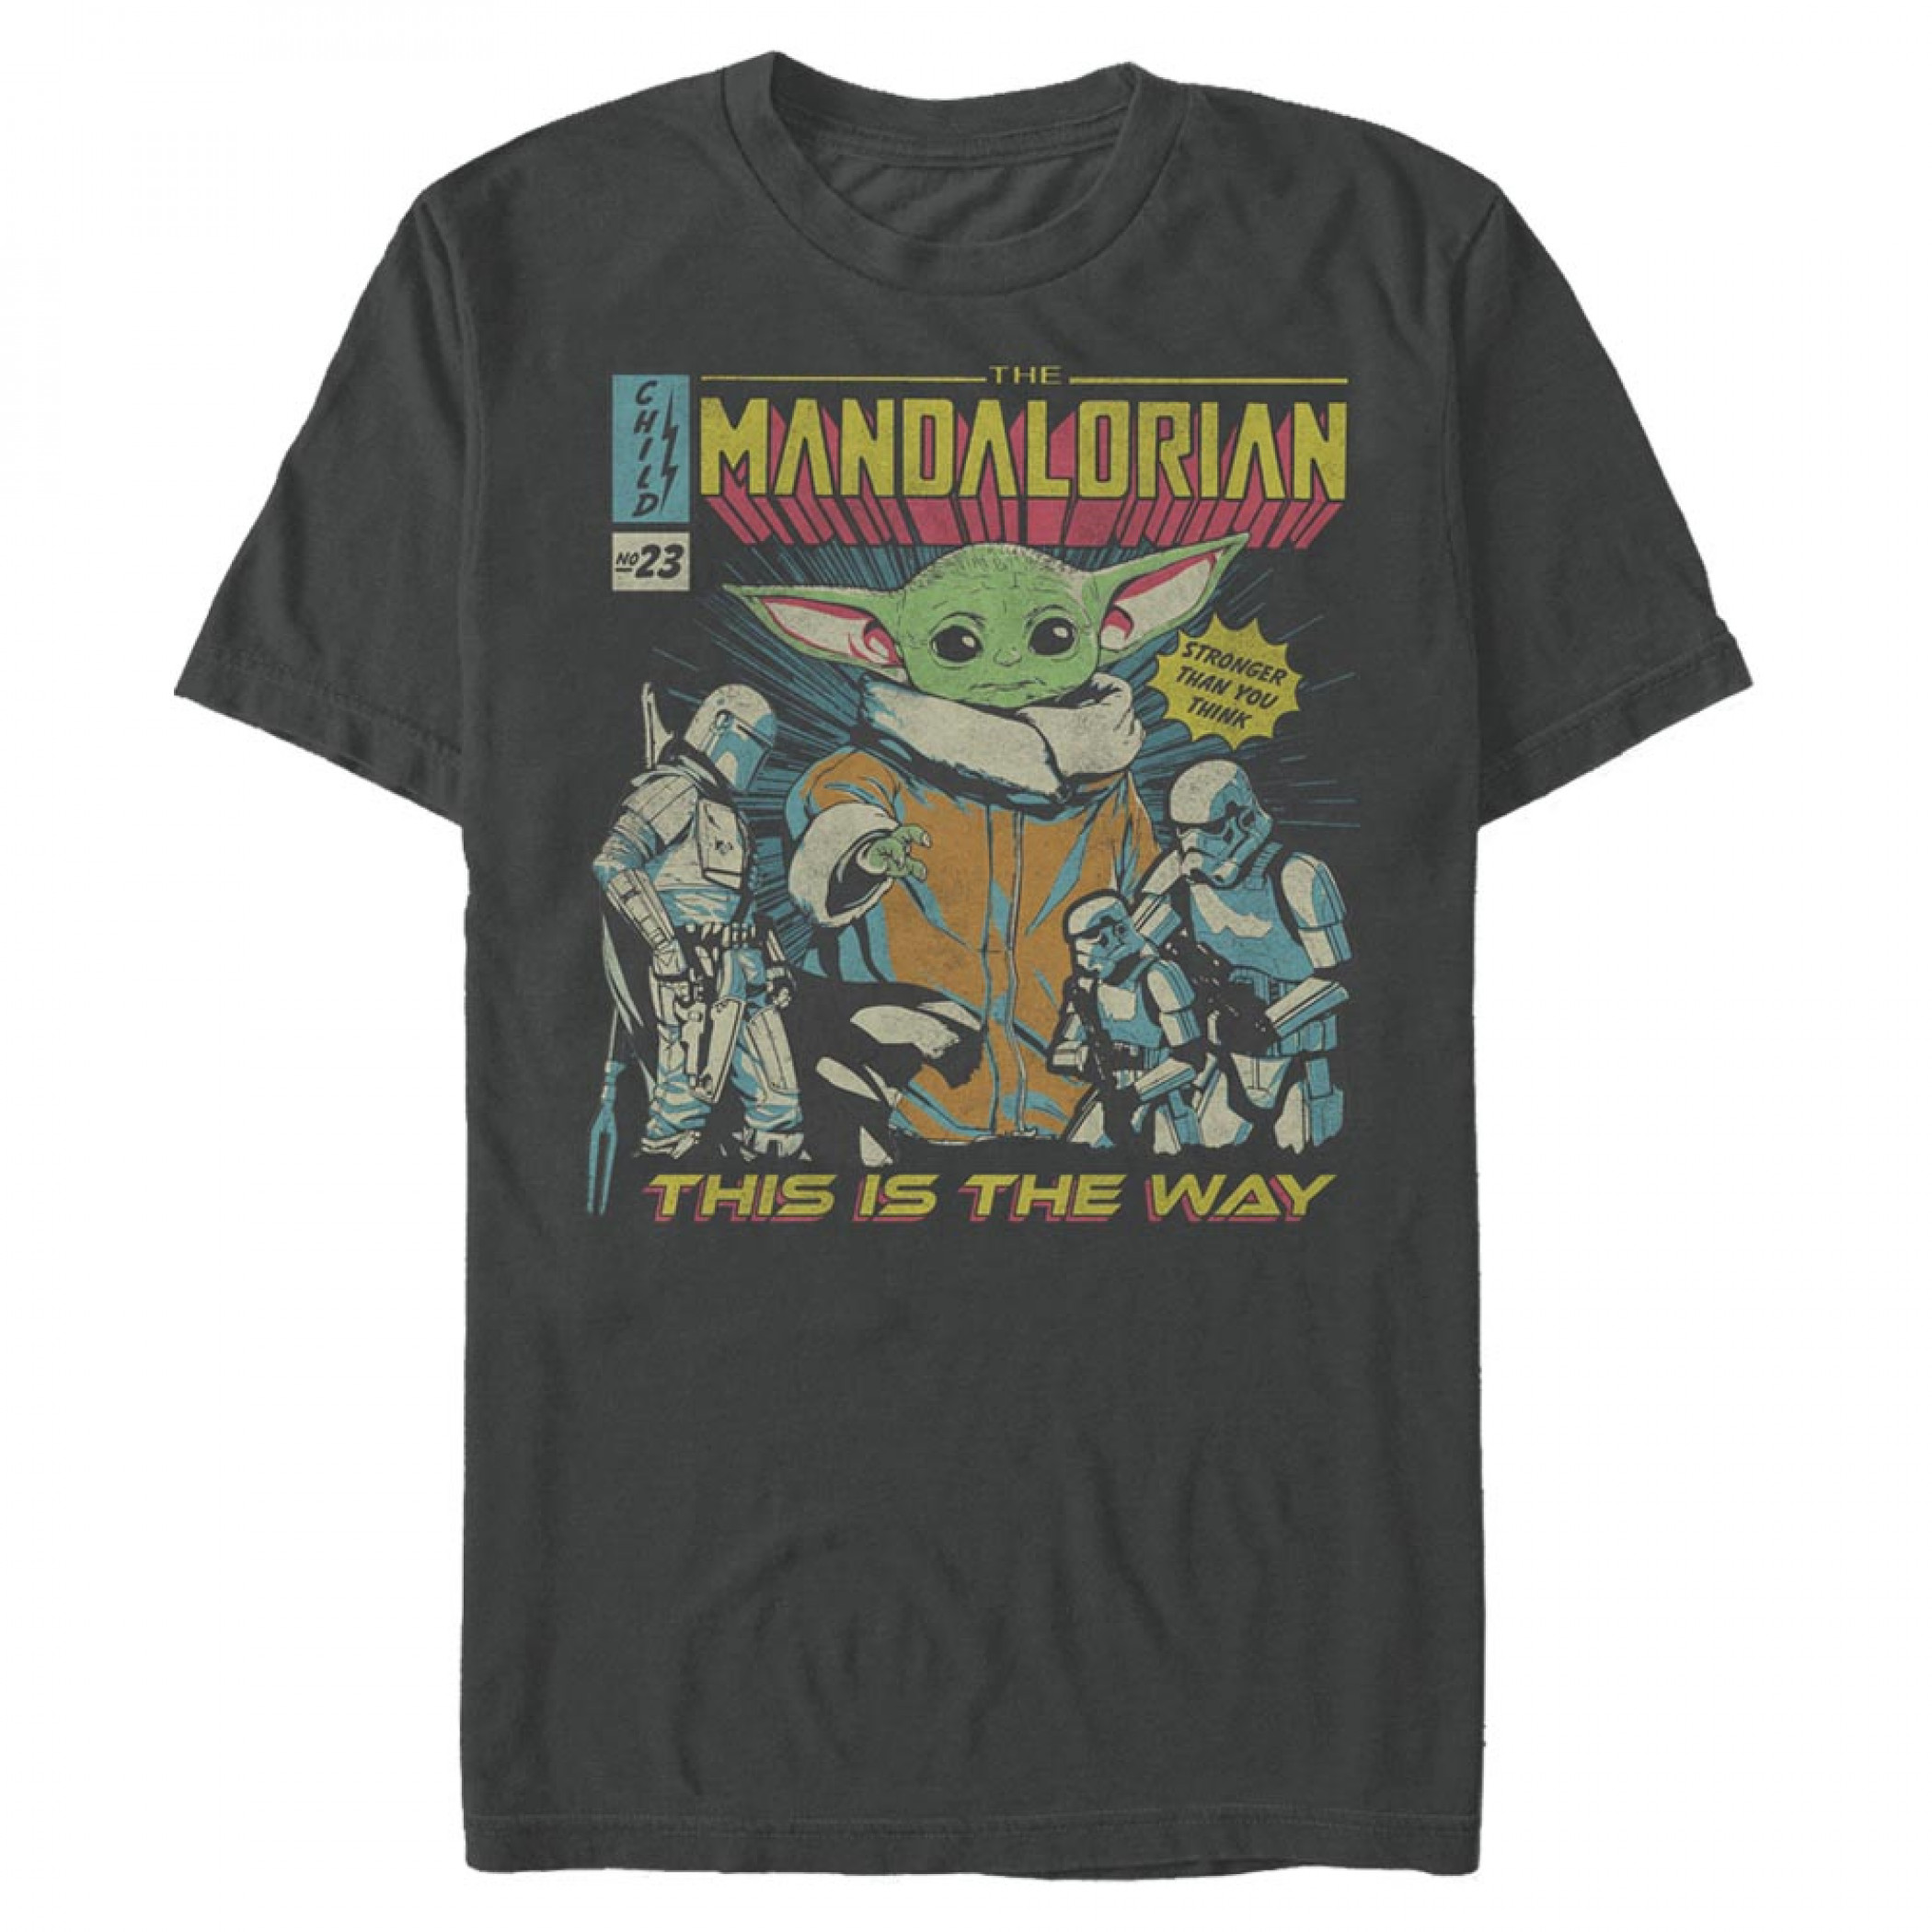 Retro Vintage Shirt Marve Comics Group Star Wars Short Sleeve The Mandalorian Comic Book Cover Shirt The Child Grugo Disney Movies